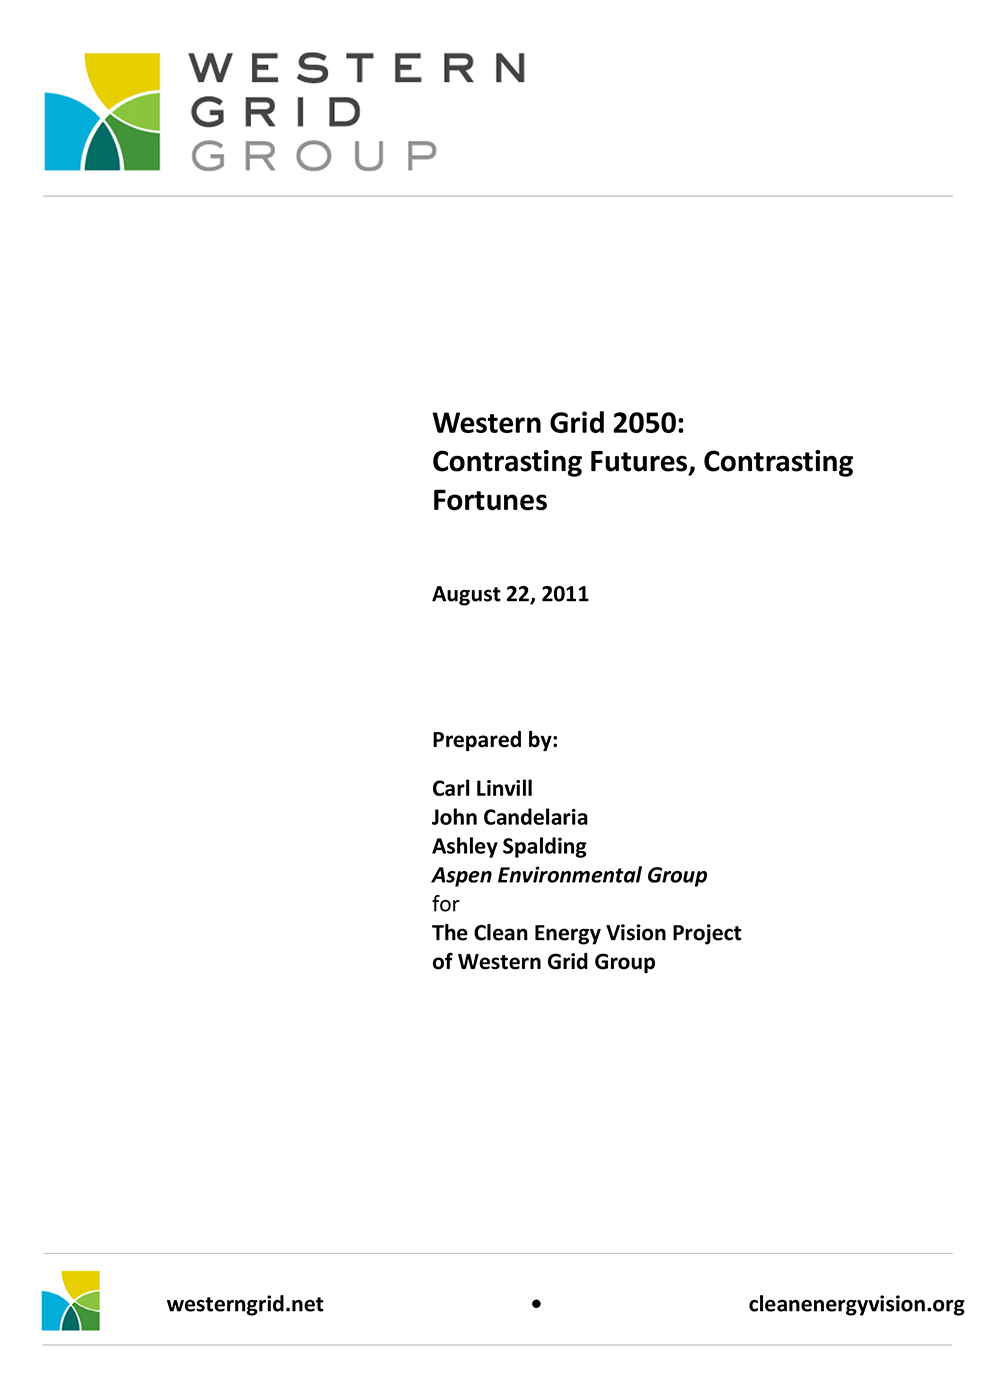 Western Grid 2050 Report